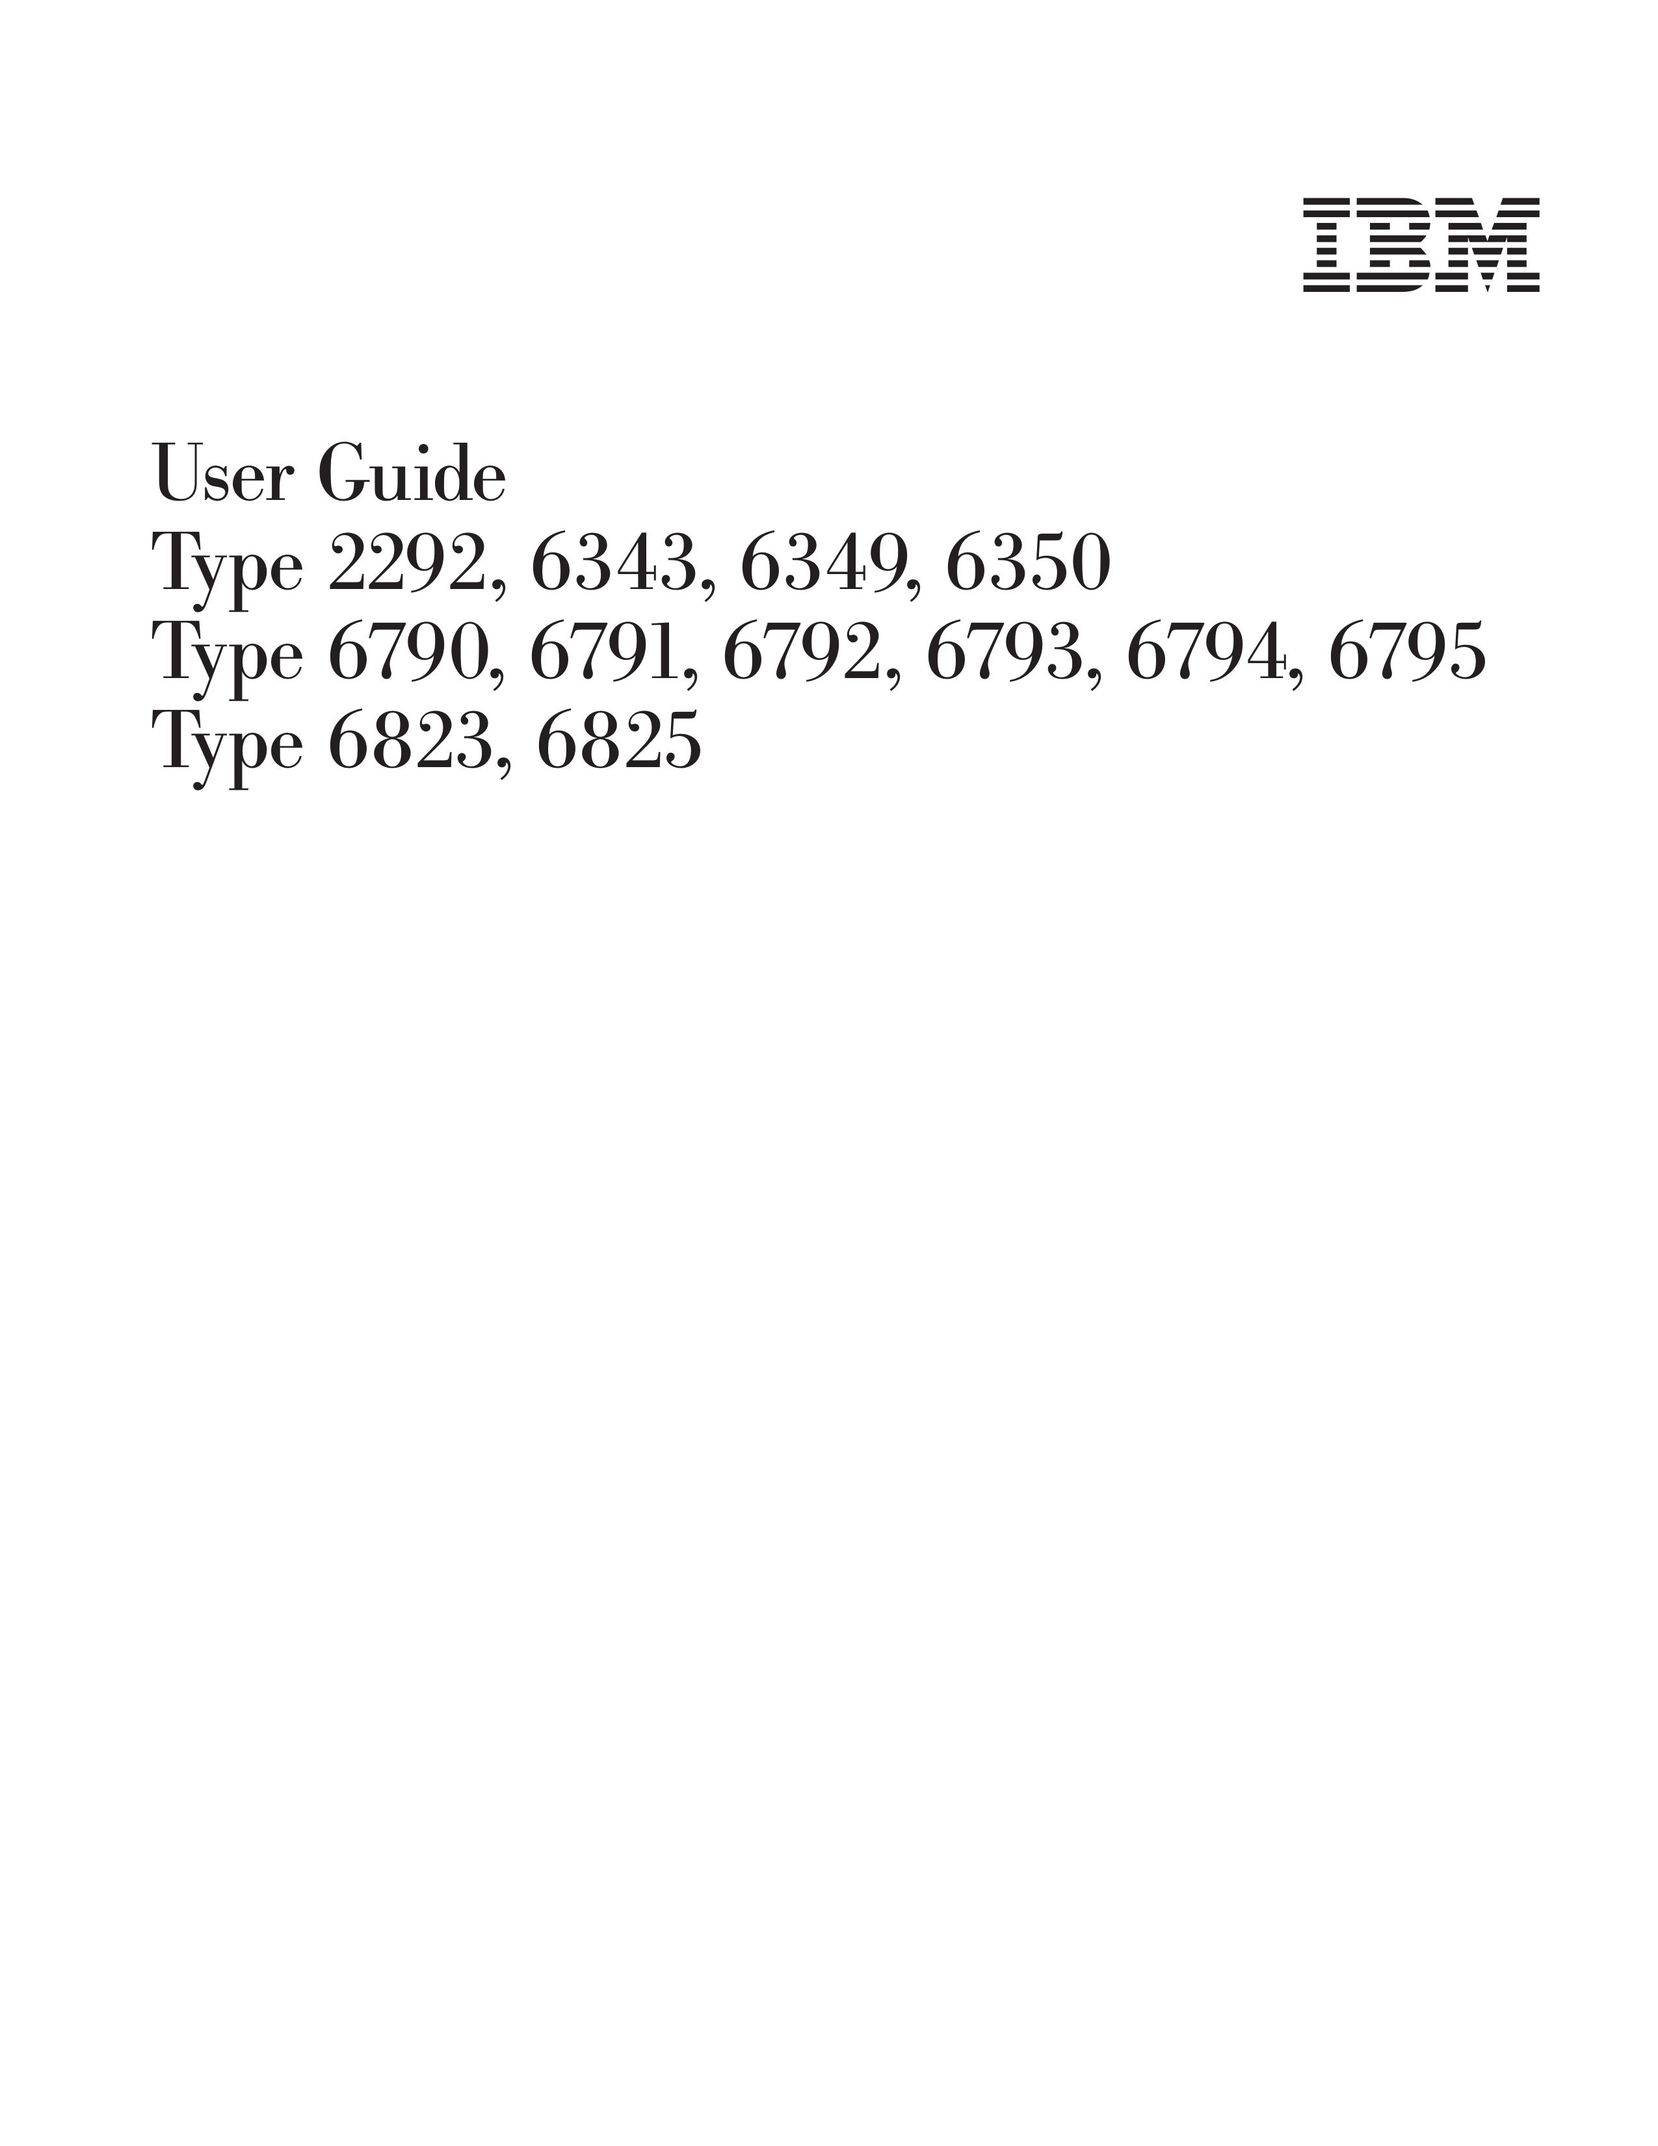 IBM Partner Pavilion 6790 Personal Computer User Manual